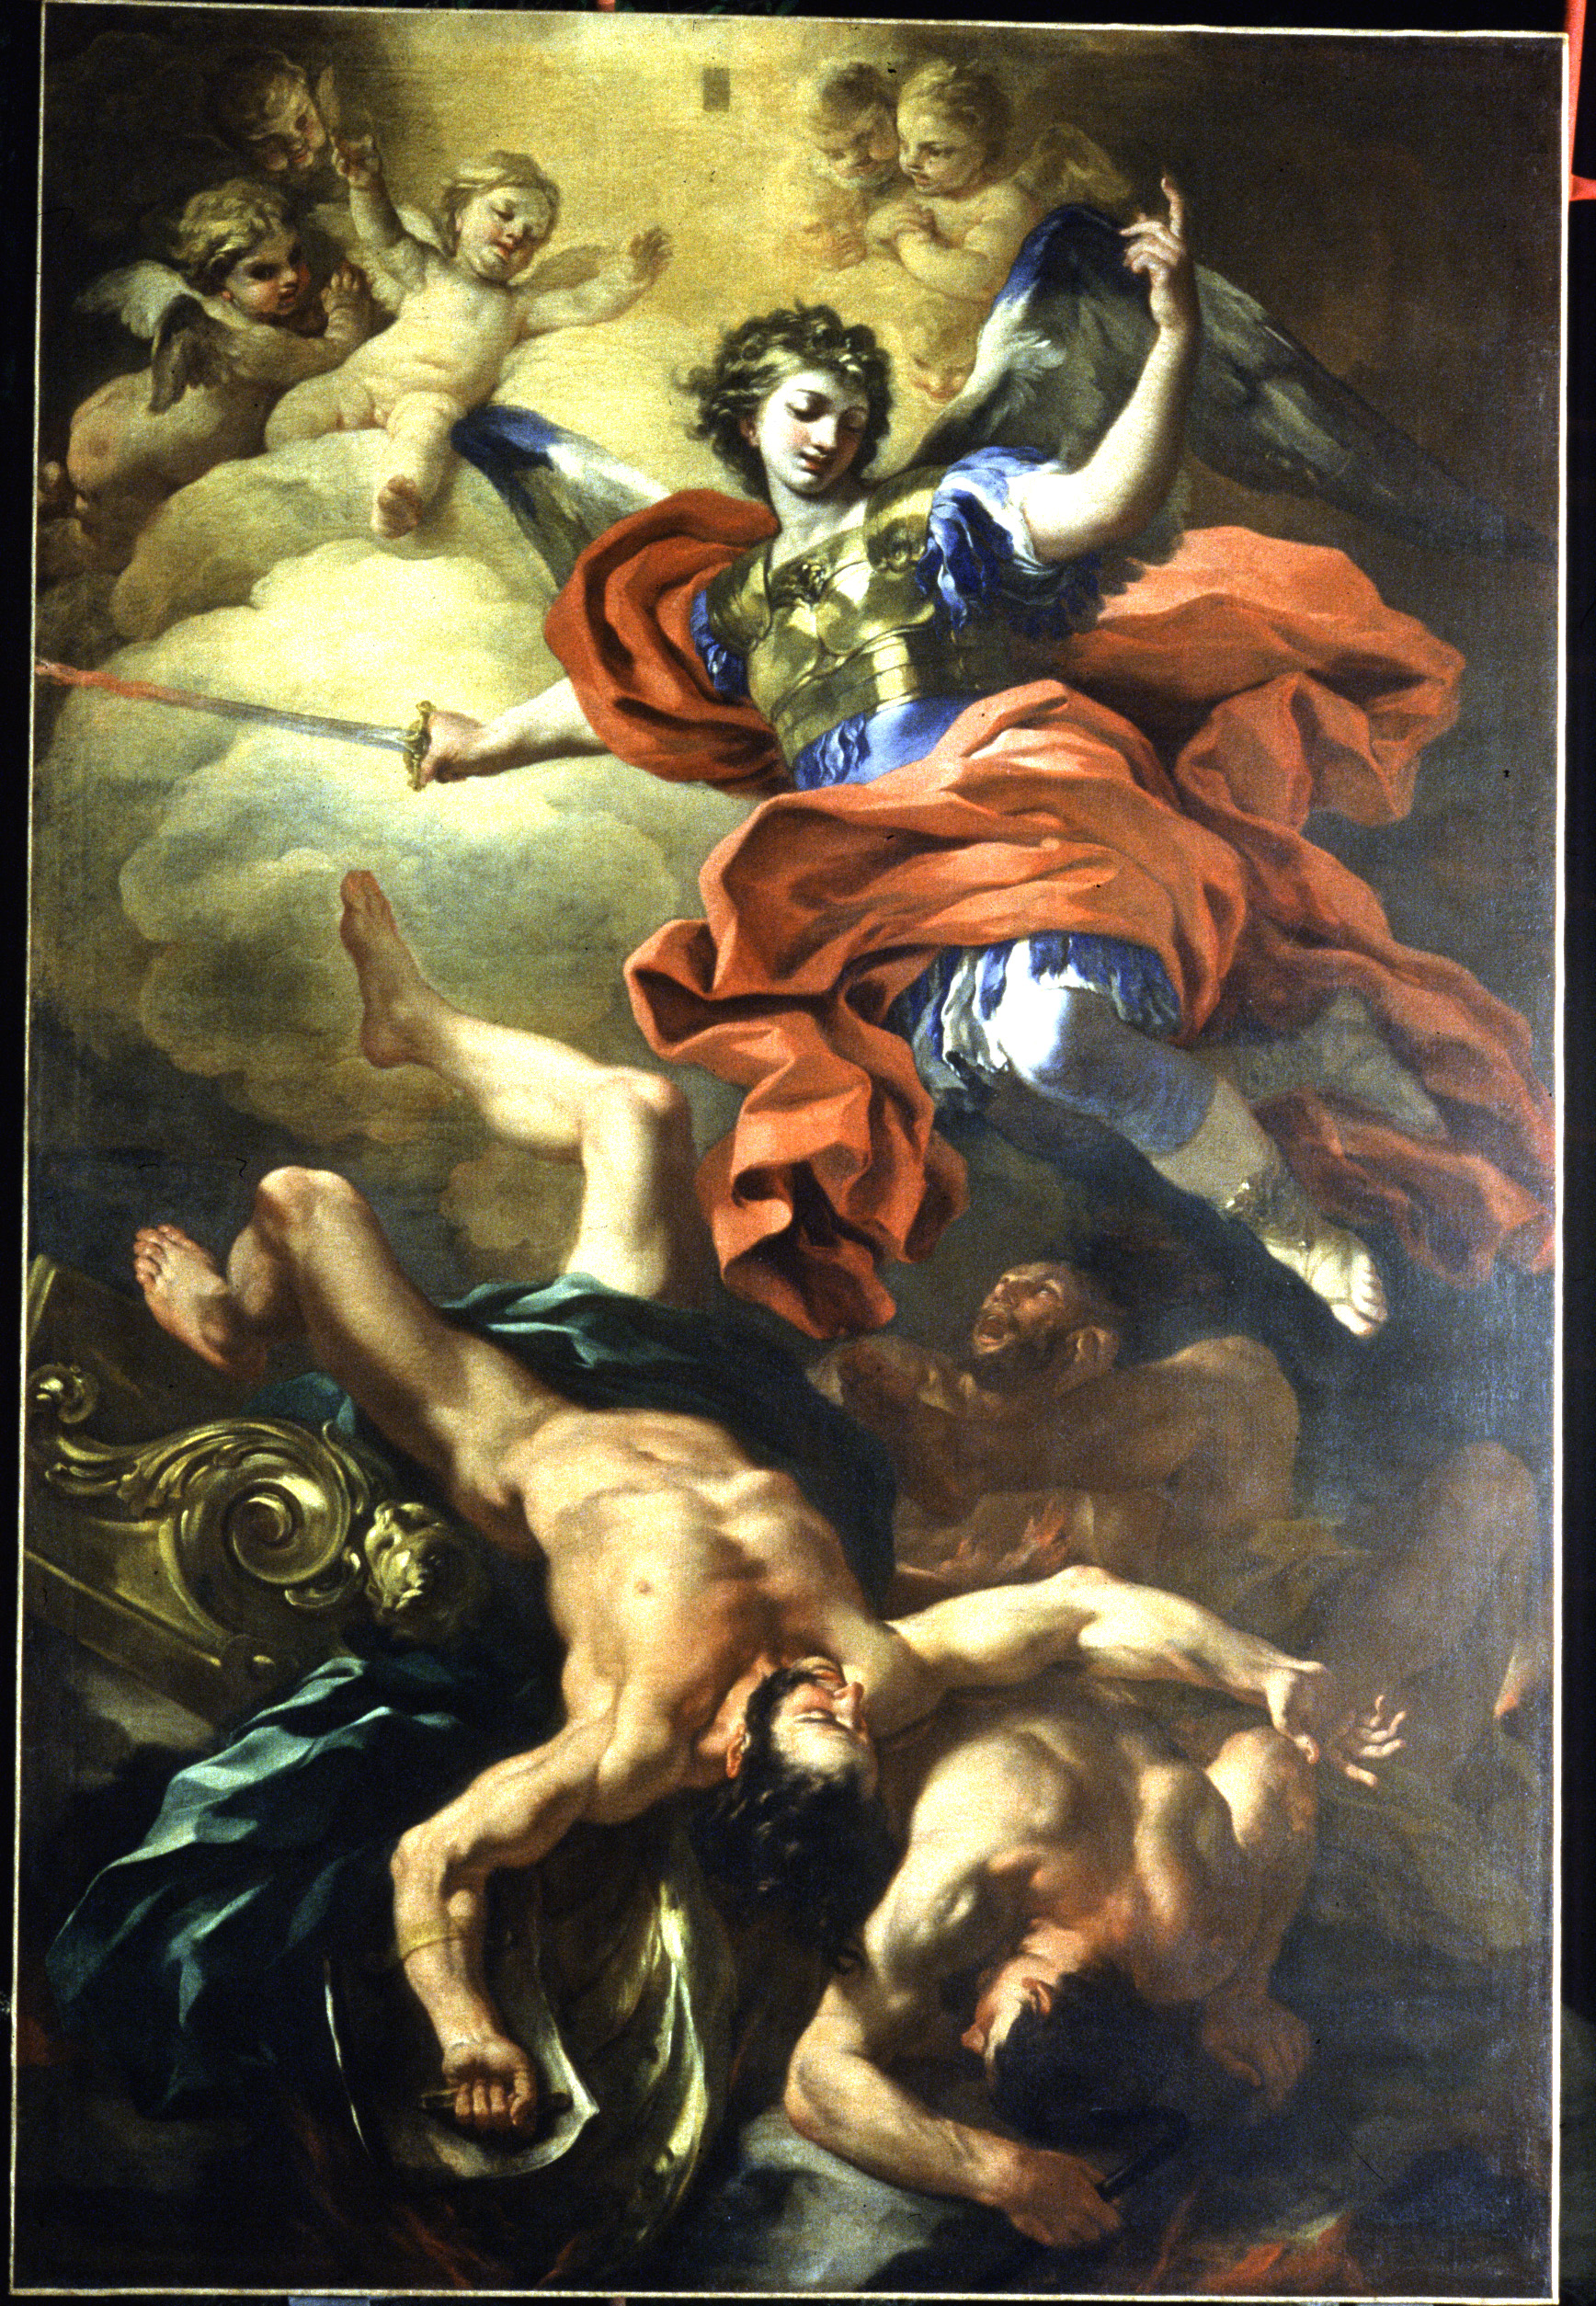 
  
    
      
      
          
 San Michele Arcangelo, F. Solimena (1692)

    
  
          
